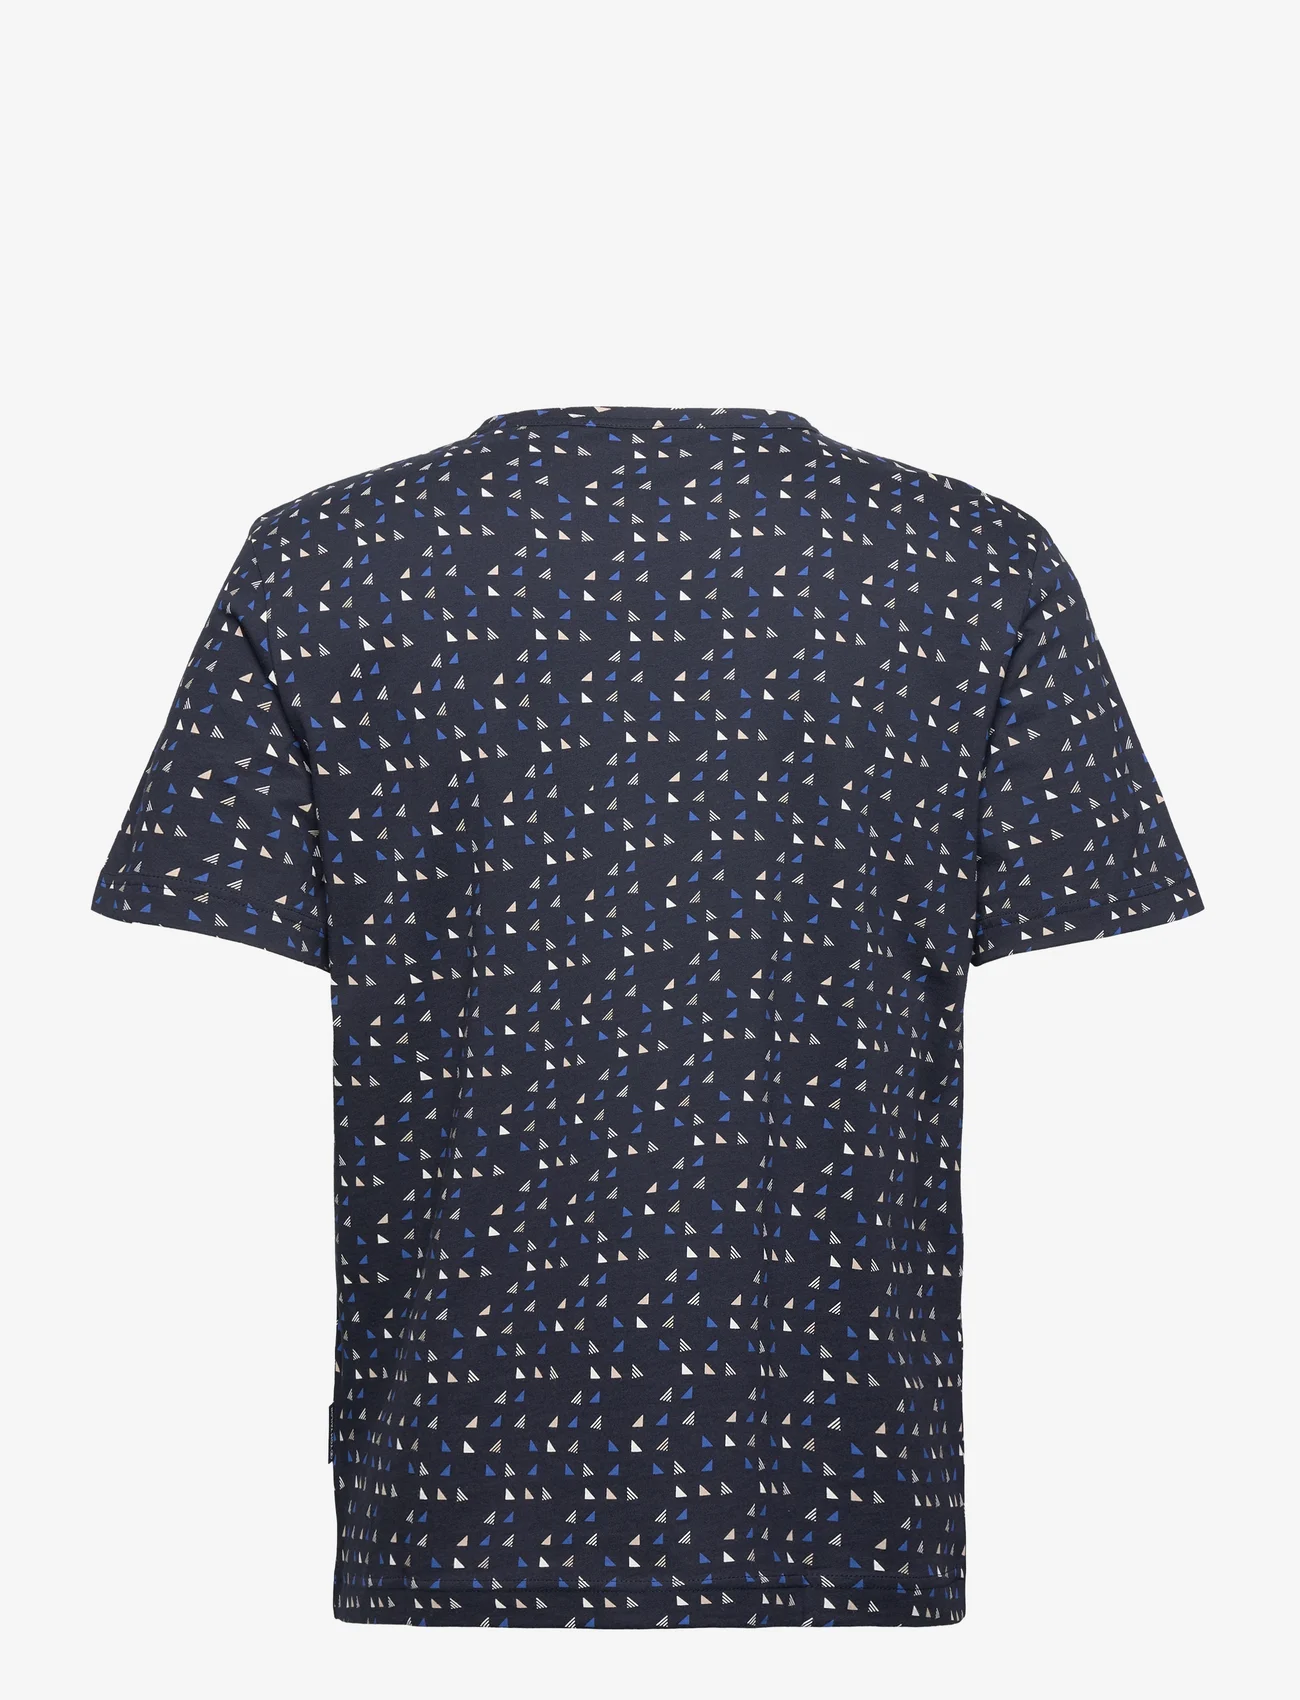 Tom Tailor - printed t-shirt - lägsta priserna - navy sporty triangle design - 1